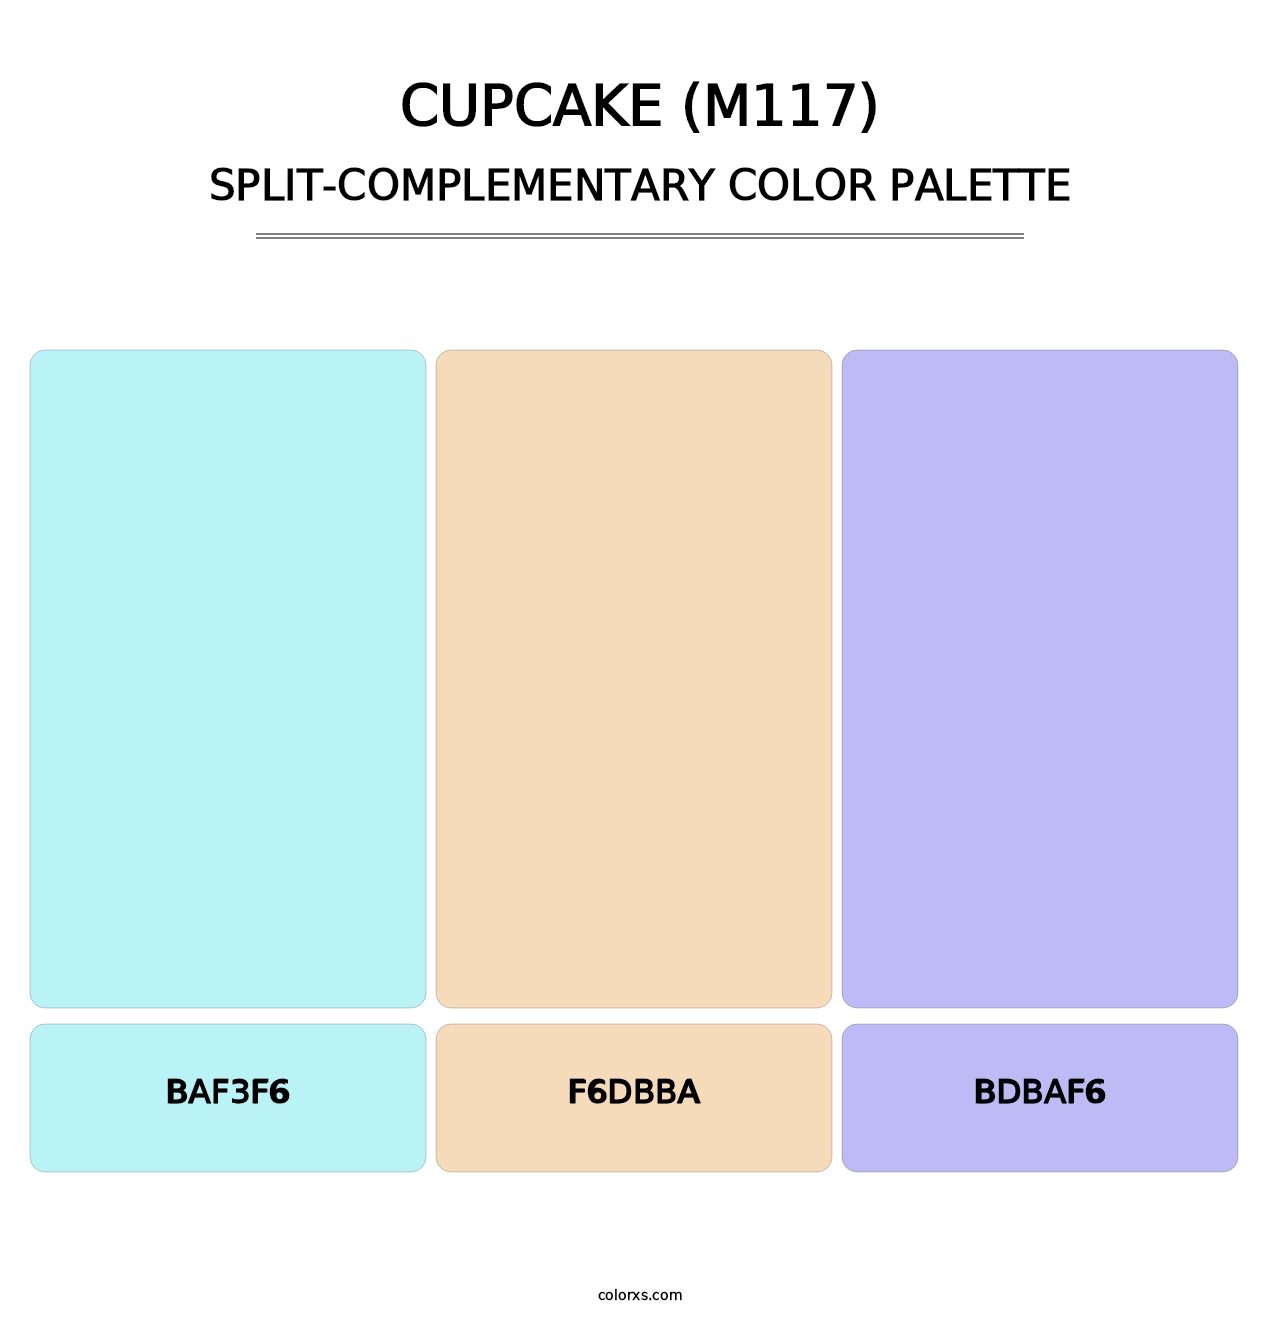 Cupcake (M117) - Split-Complementary Color Palette